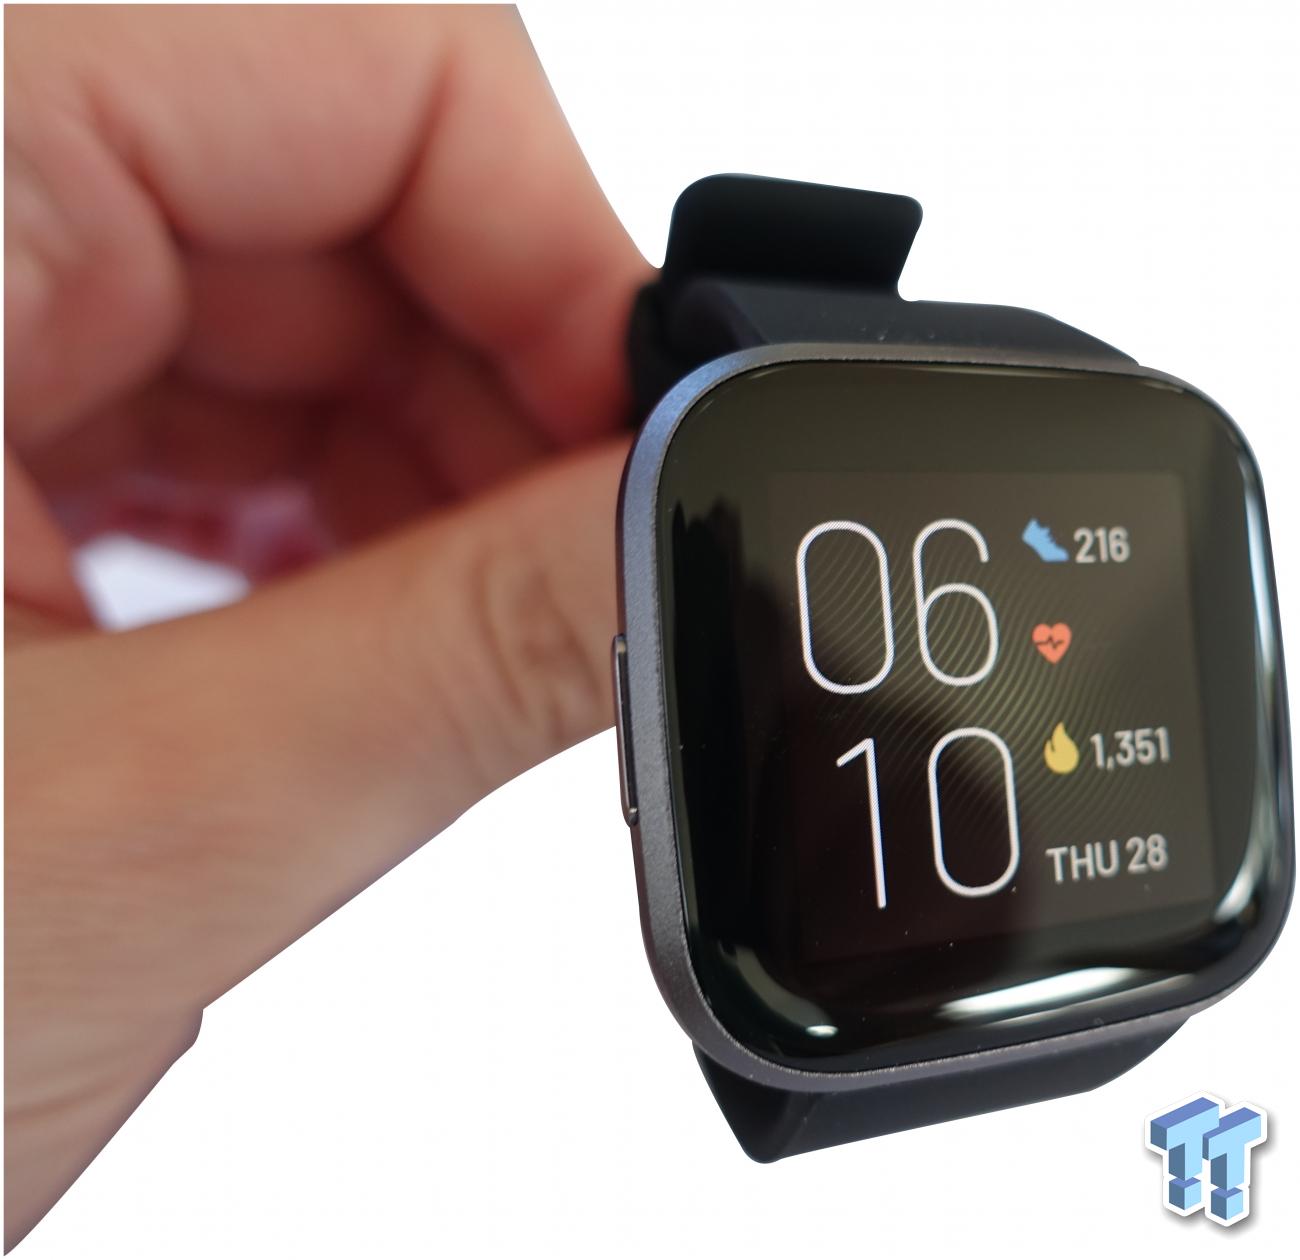 Fitbit Versa Smart Fitness Watch Review